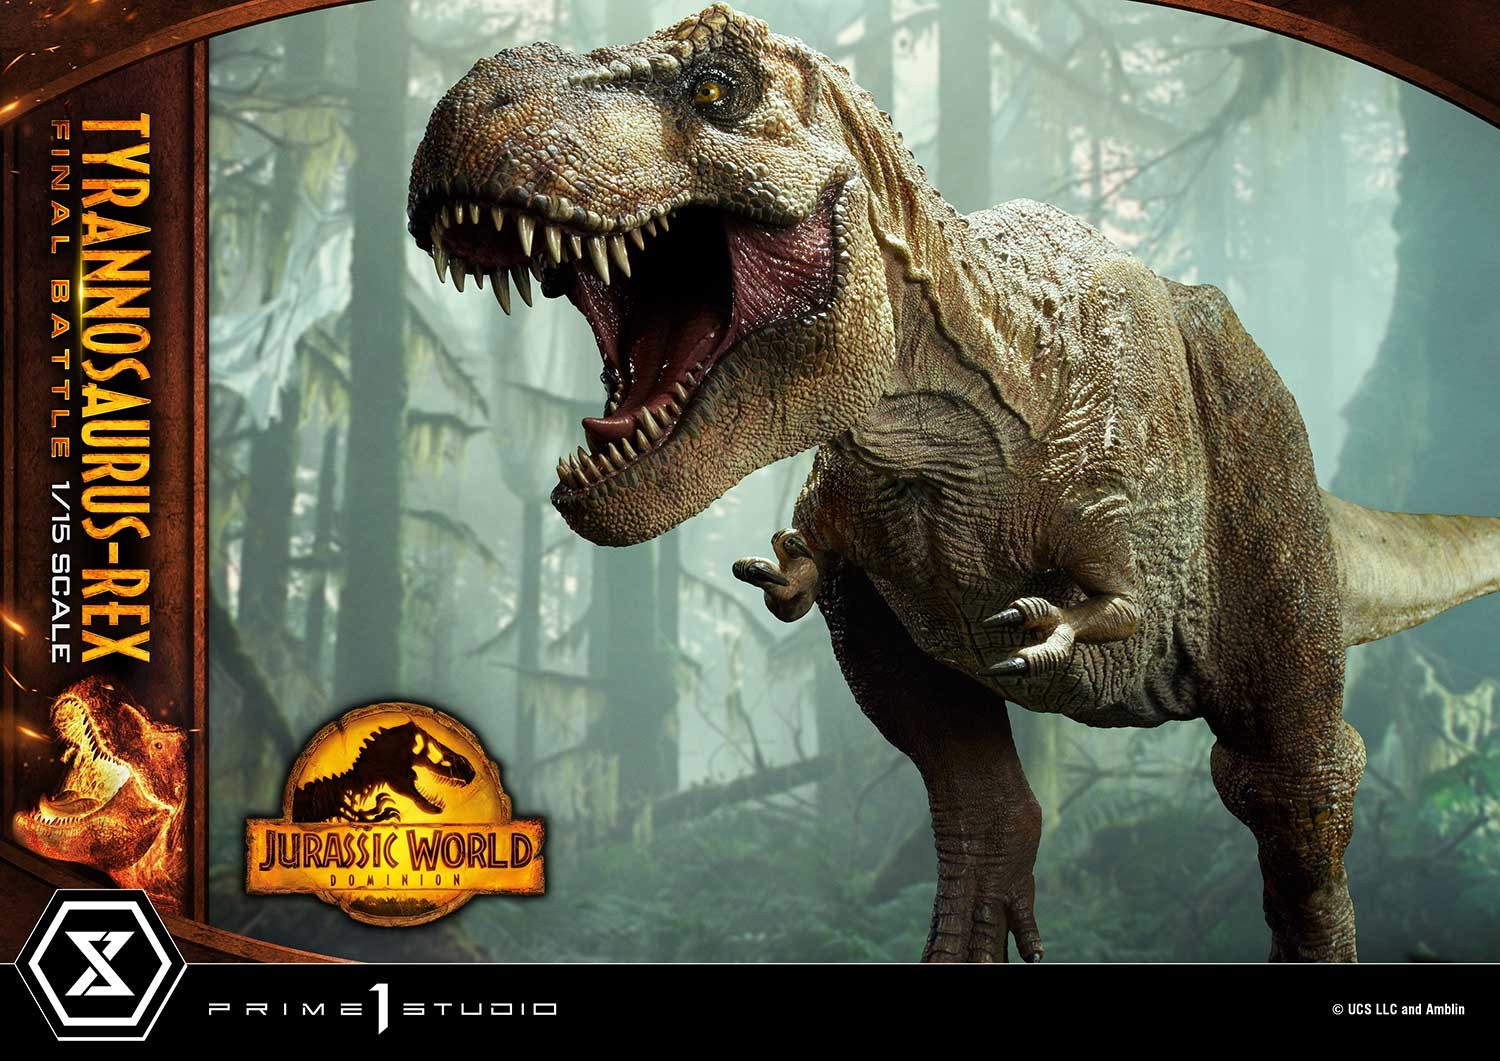 Tyrannosaurus-Rex Final Battle (Ultimate Version) Statue by Prime 1 Studio